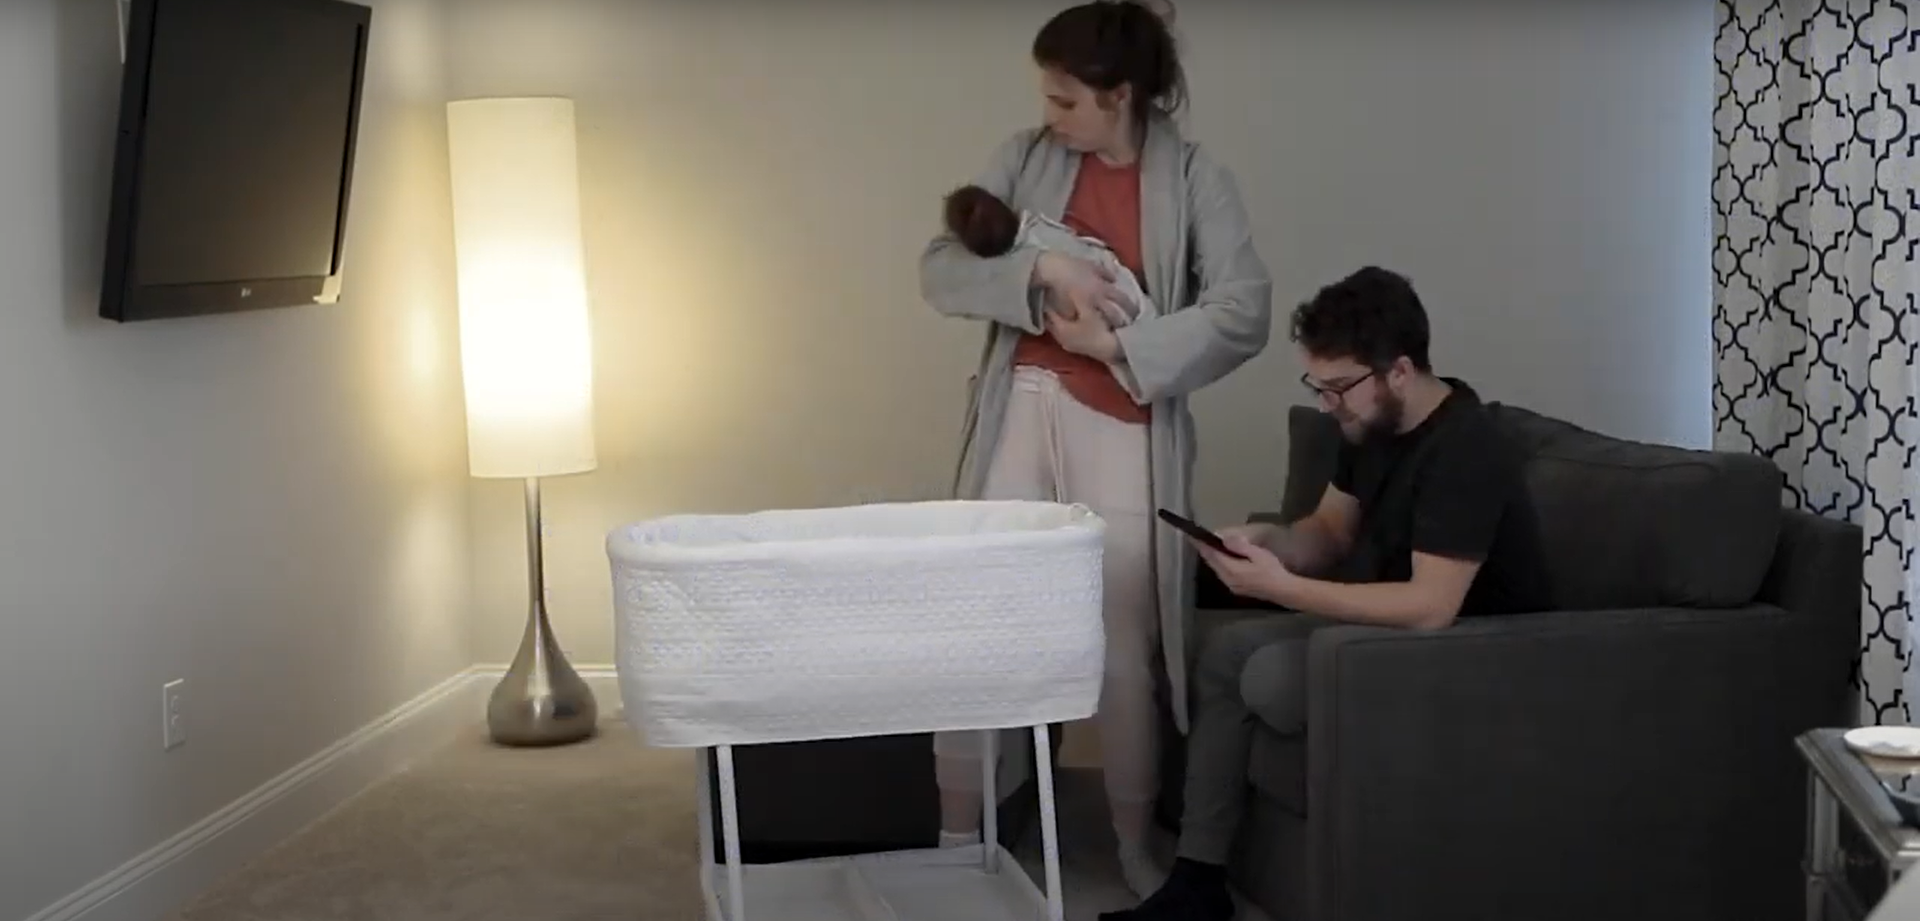 Load video: mamaRoo sleep bassinet For the Win!